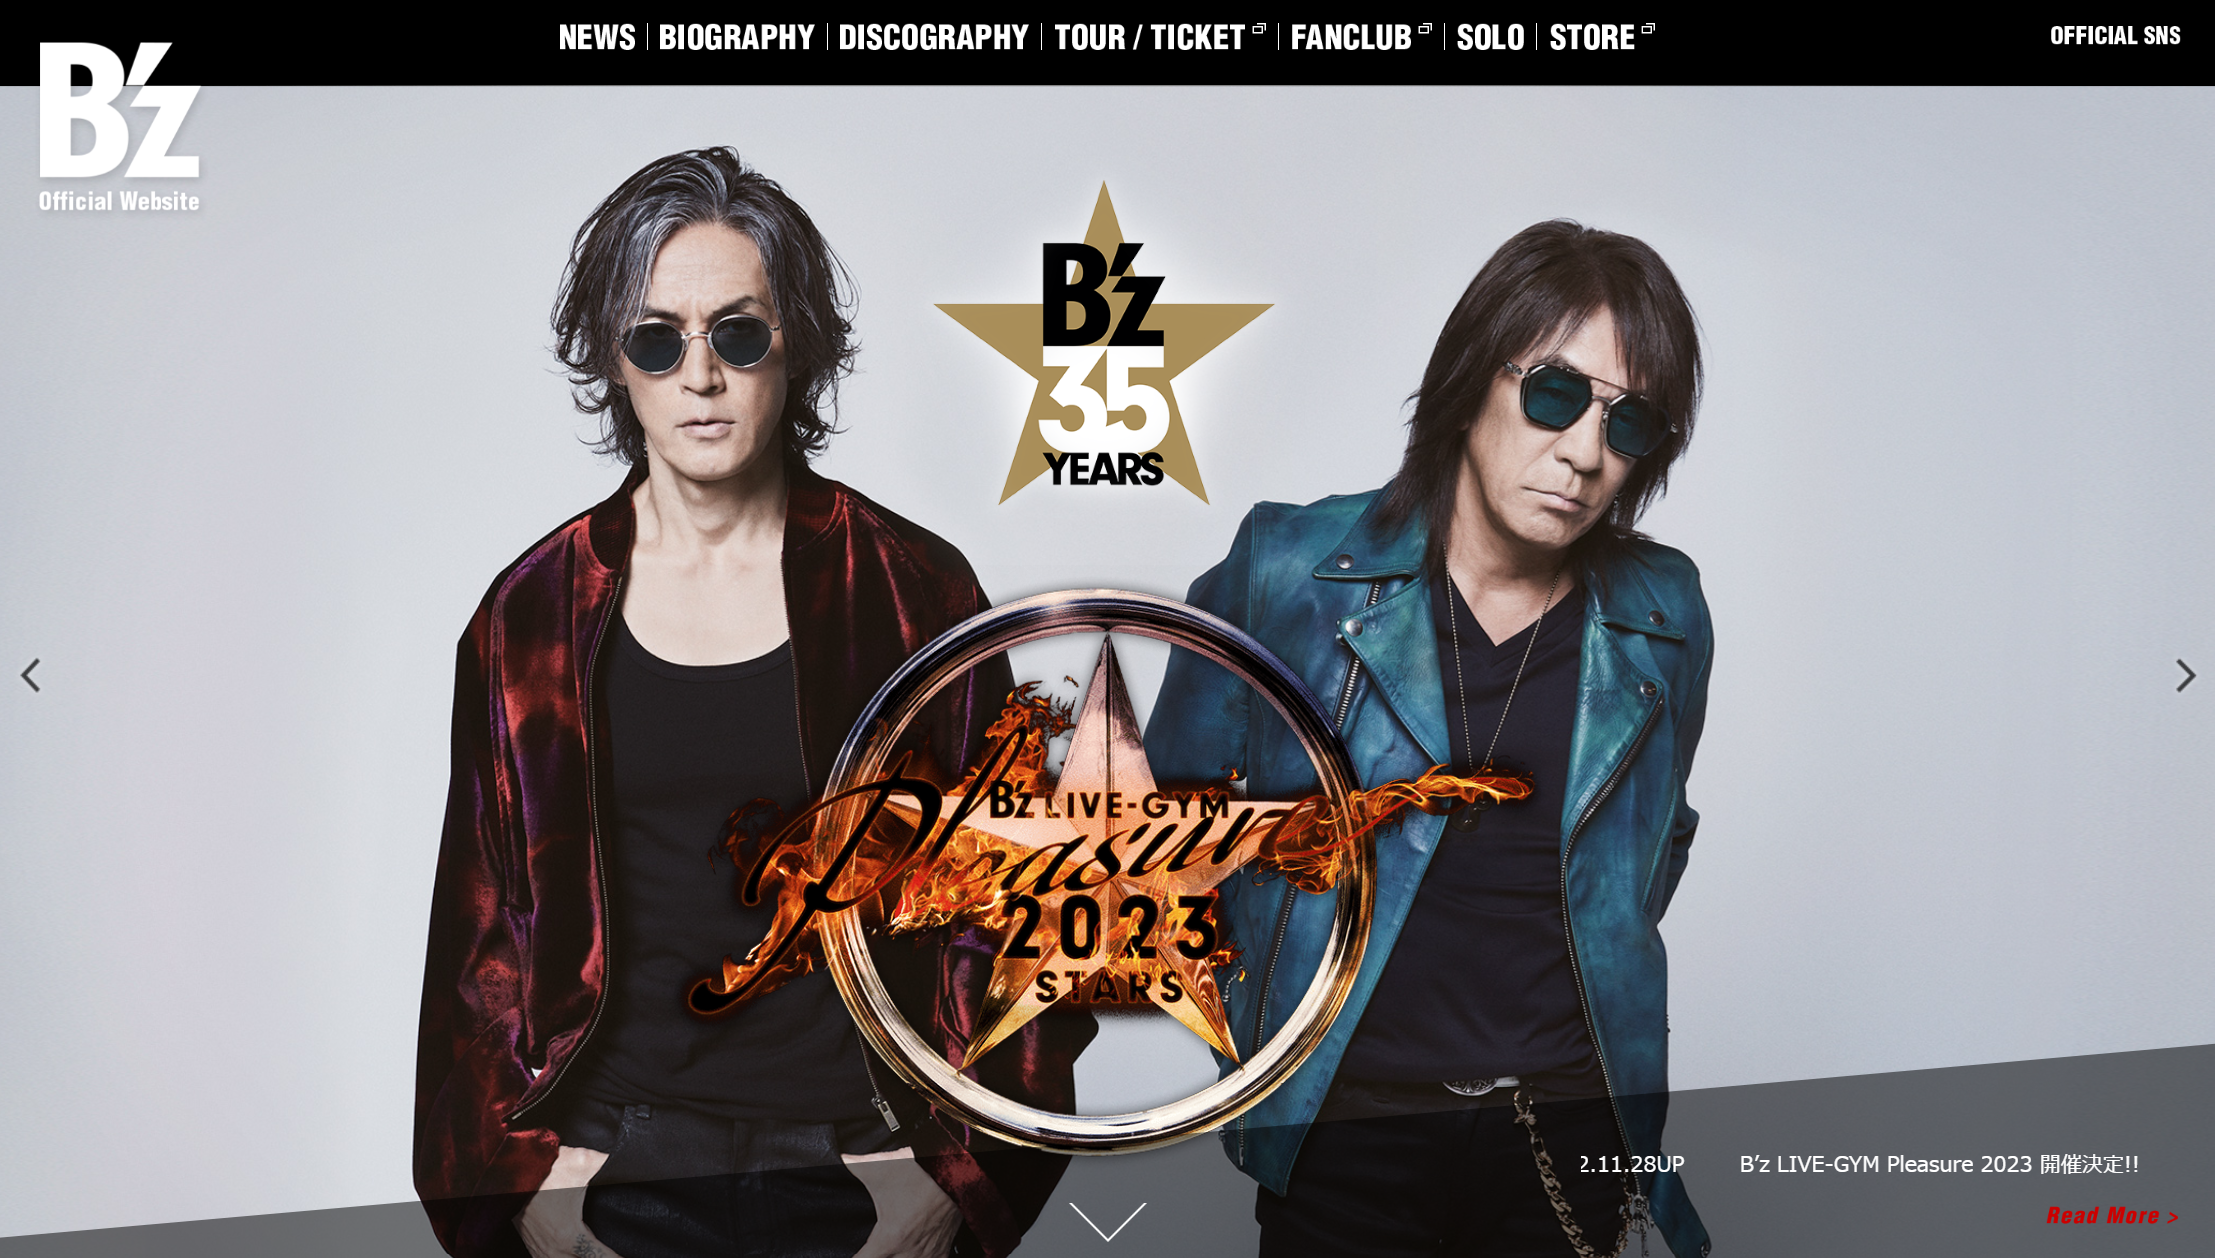 『B'z LIVE-GYM Pleasure 2023 -STARS-』が告知された公式サイトのキャプチャ画像